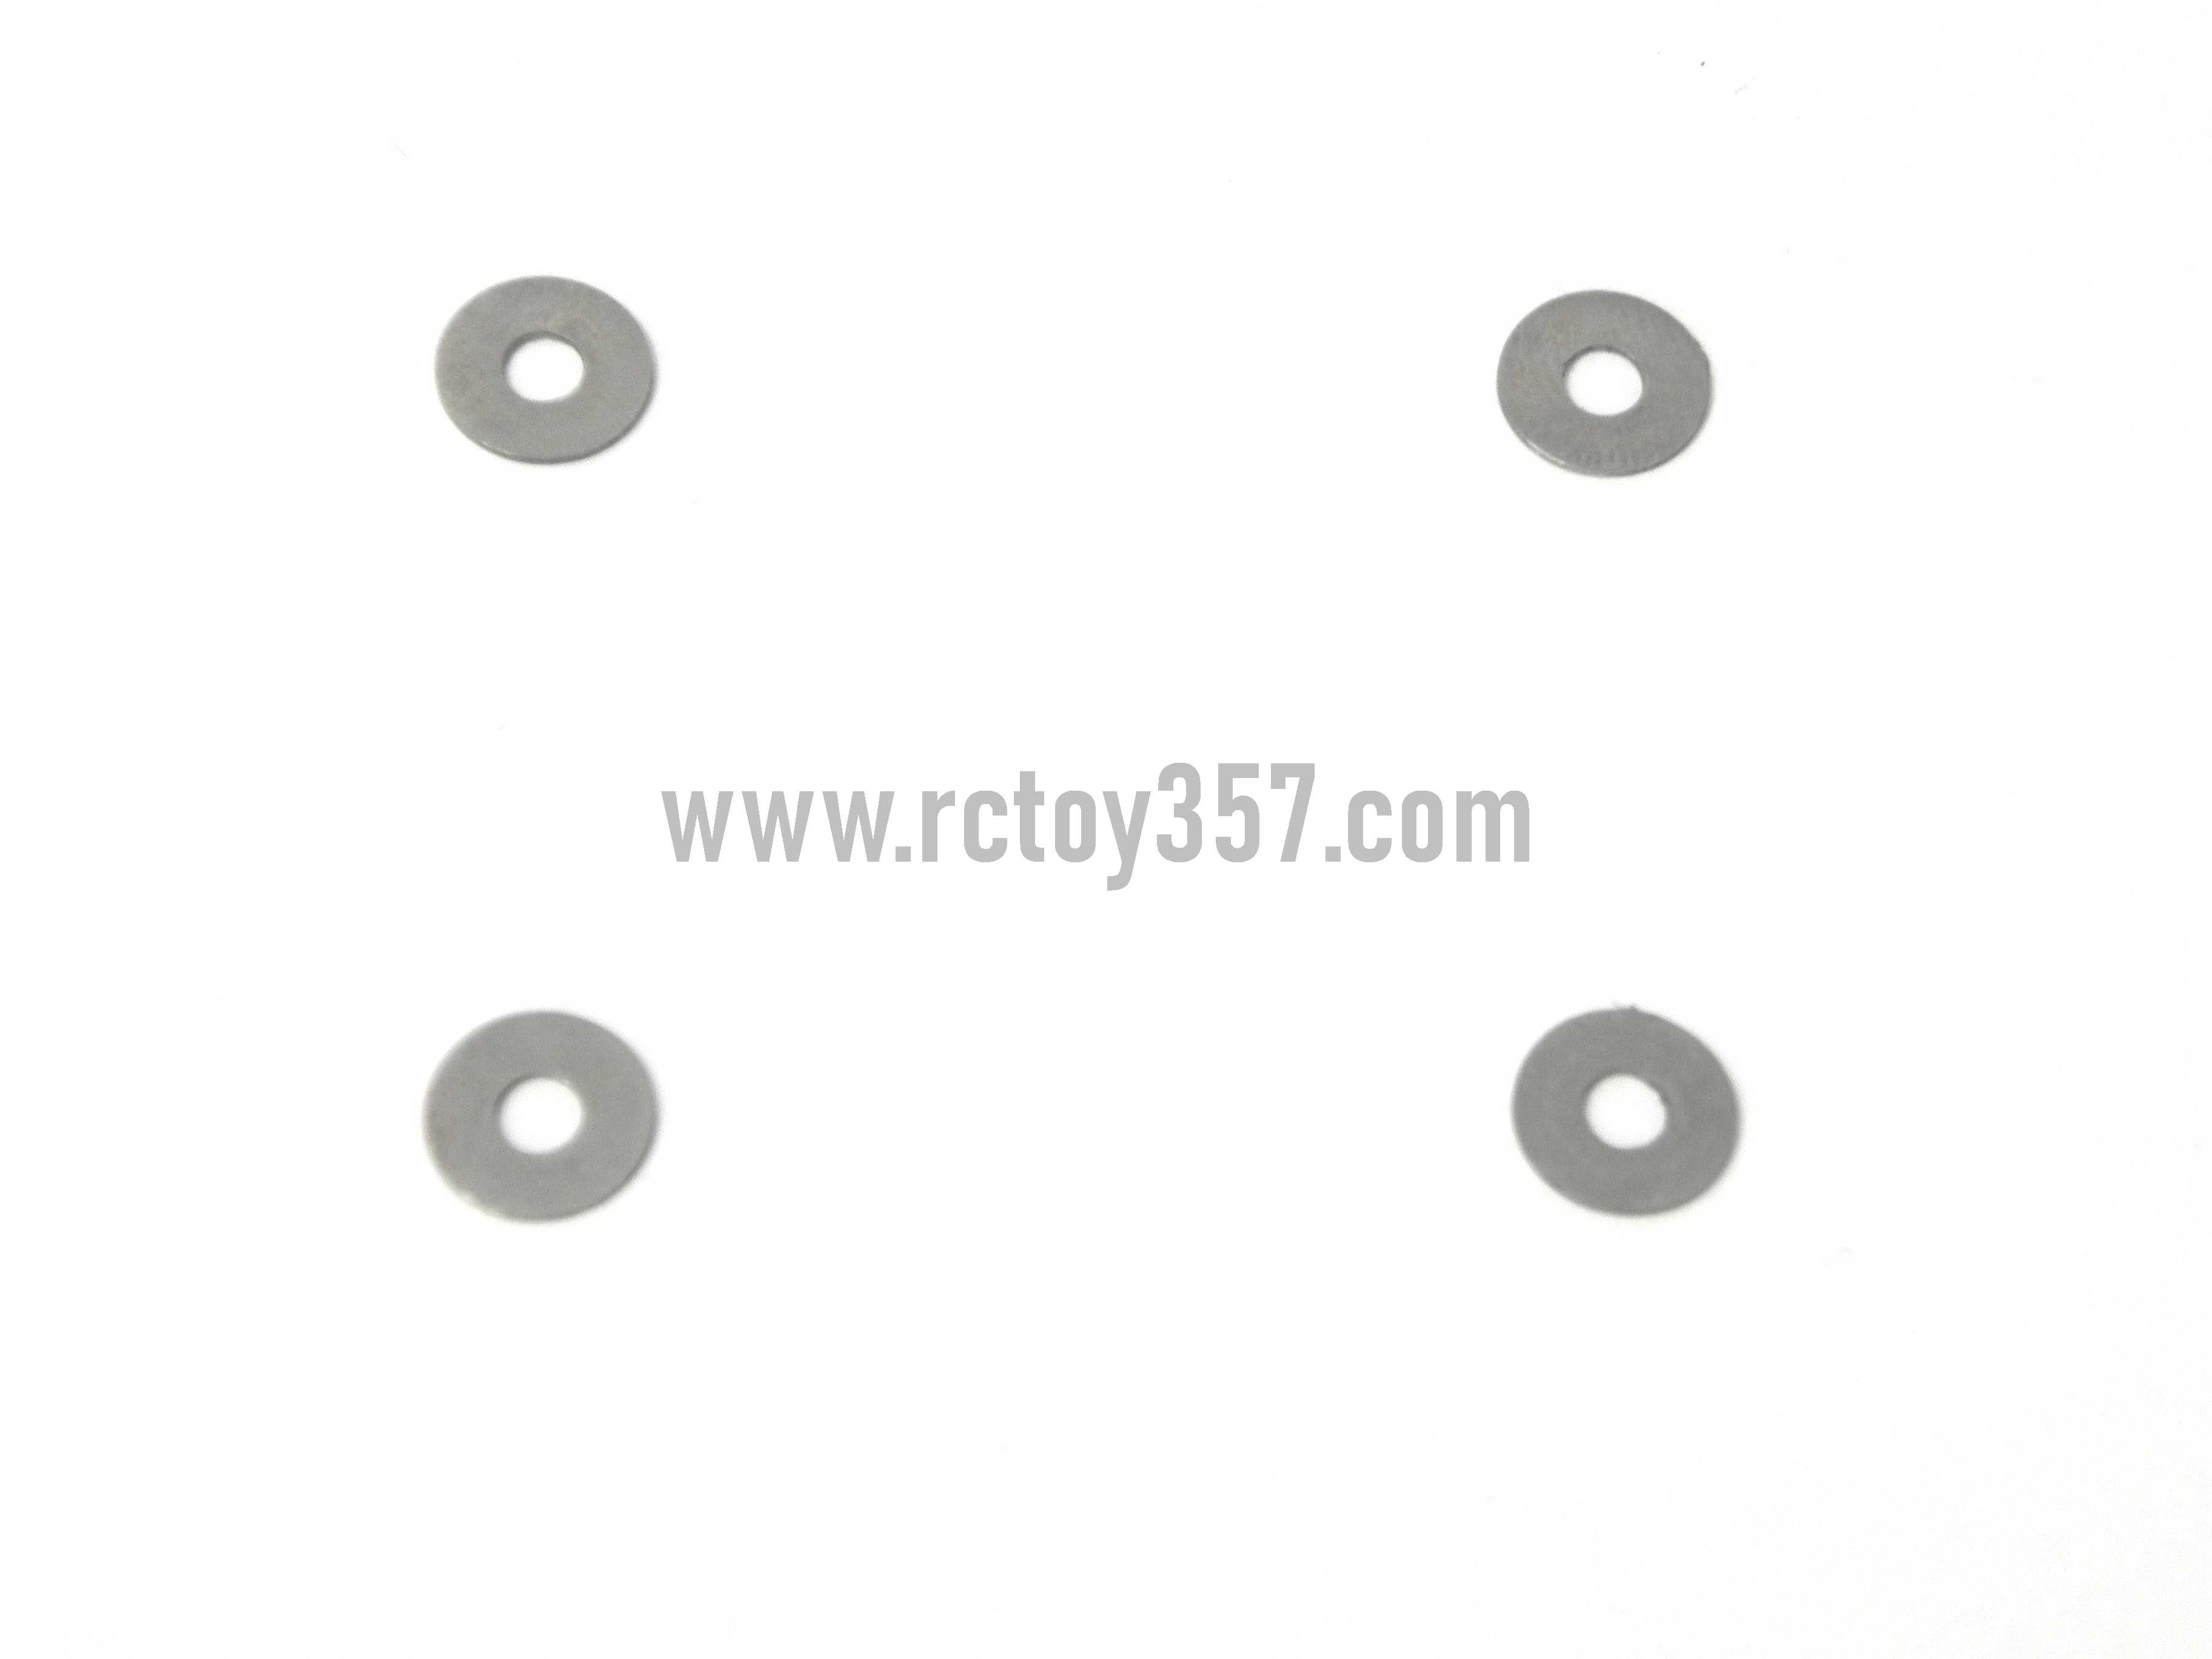 RCToy357.com - SYMA X8W Quadcopter toy Parts gasket